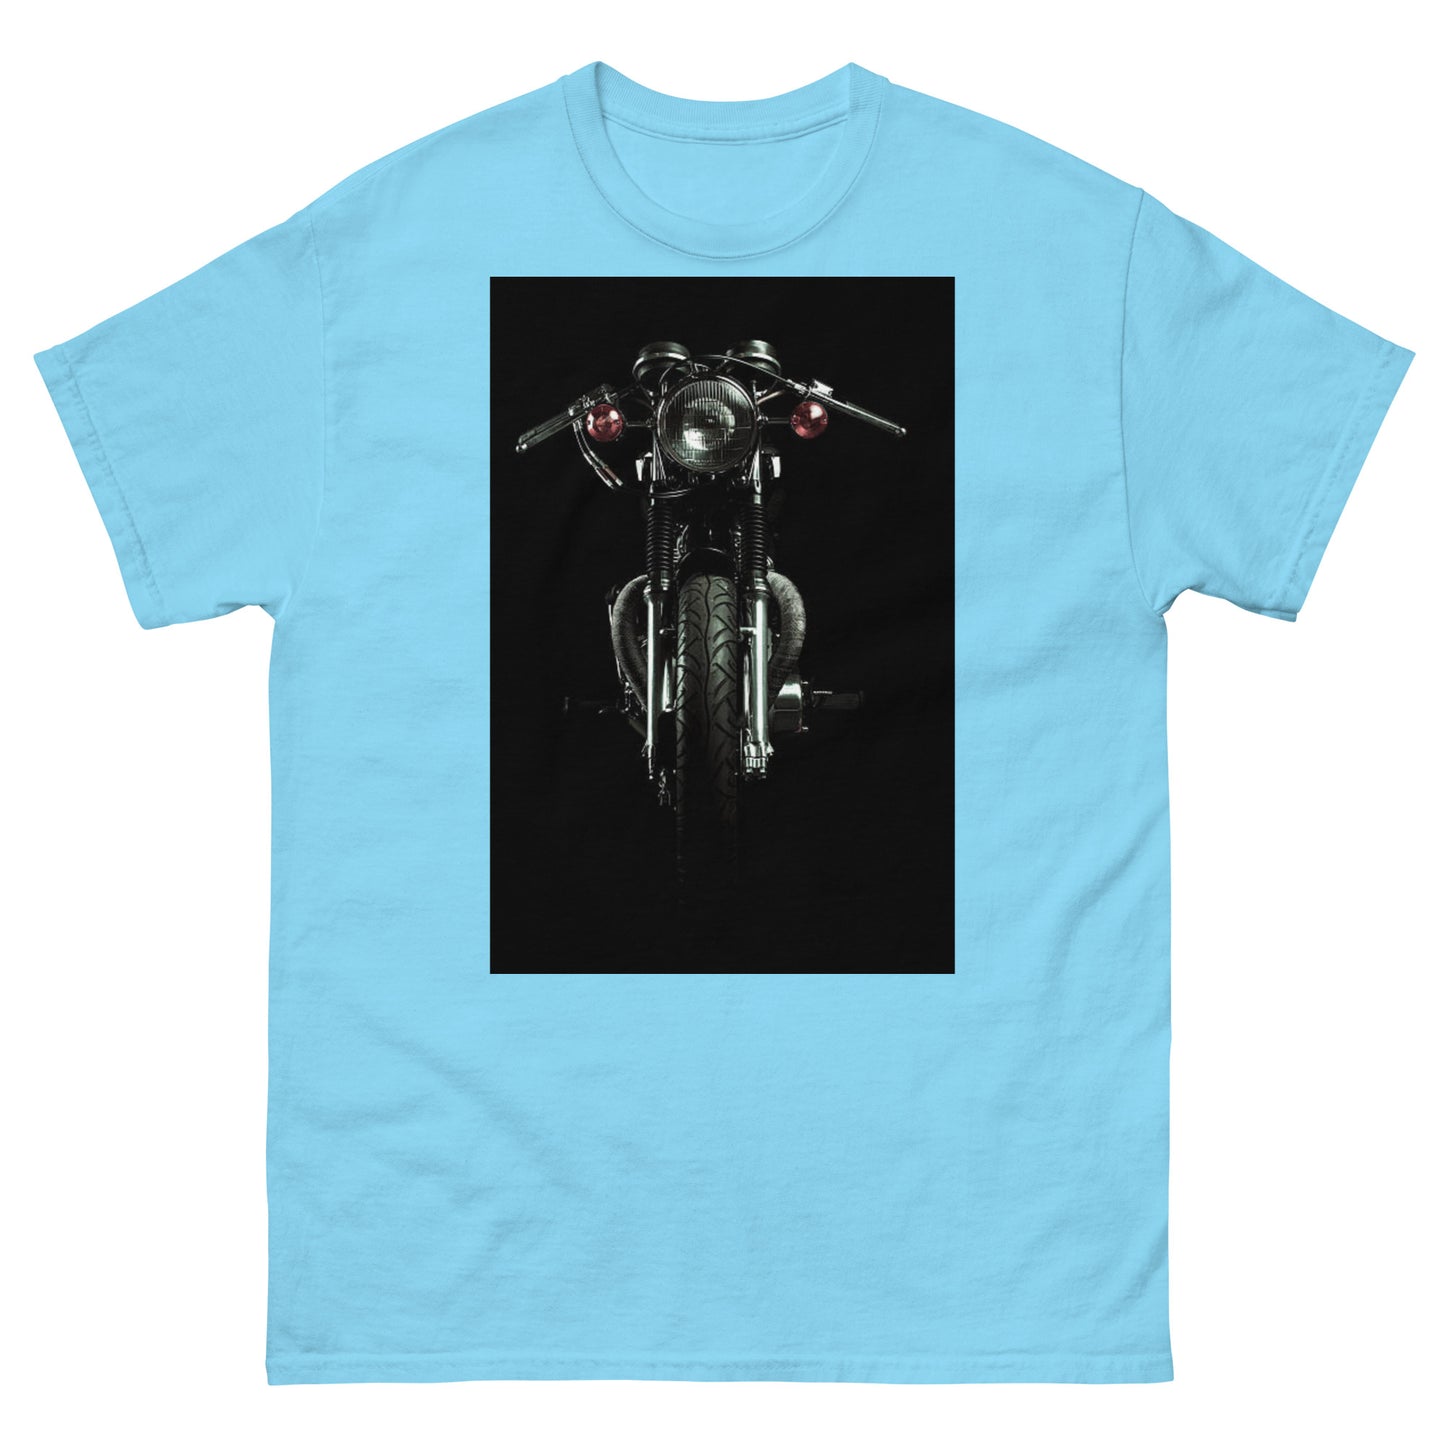 Motorcycle Shirt